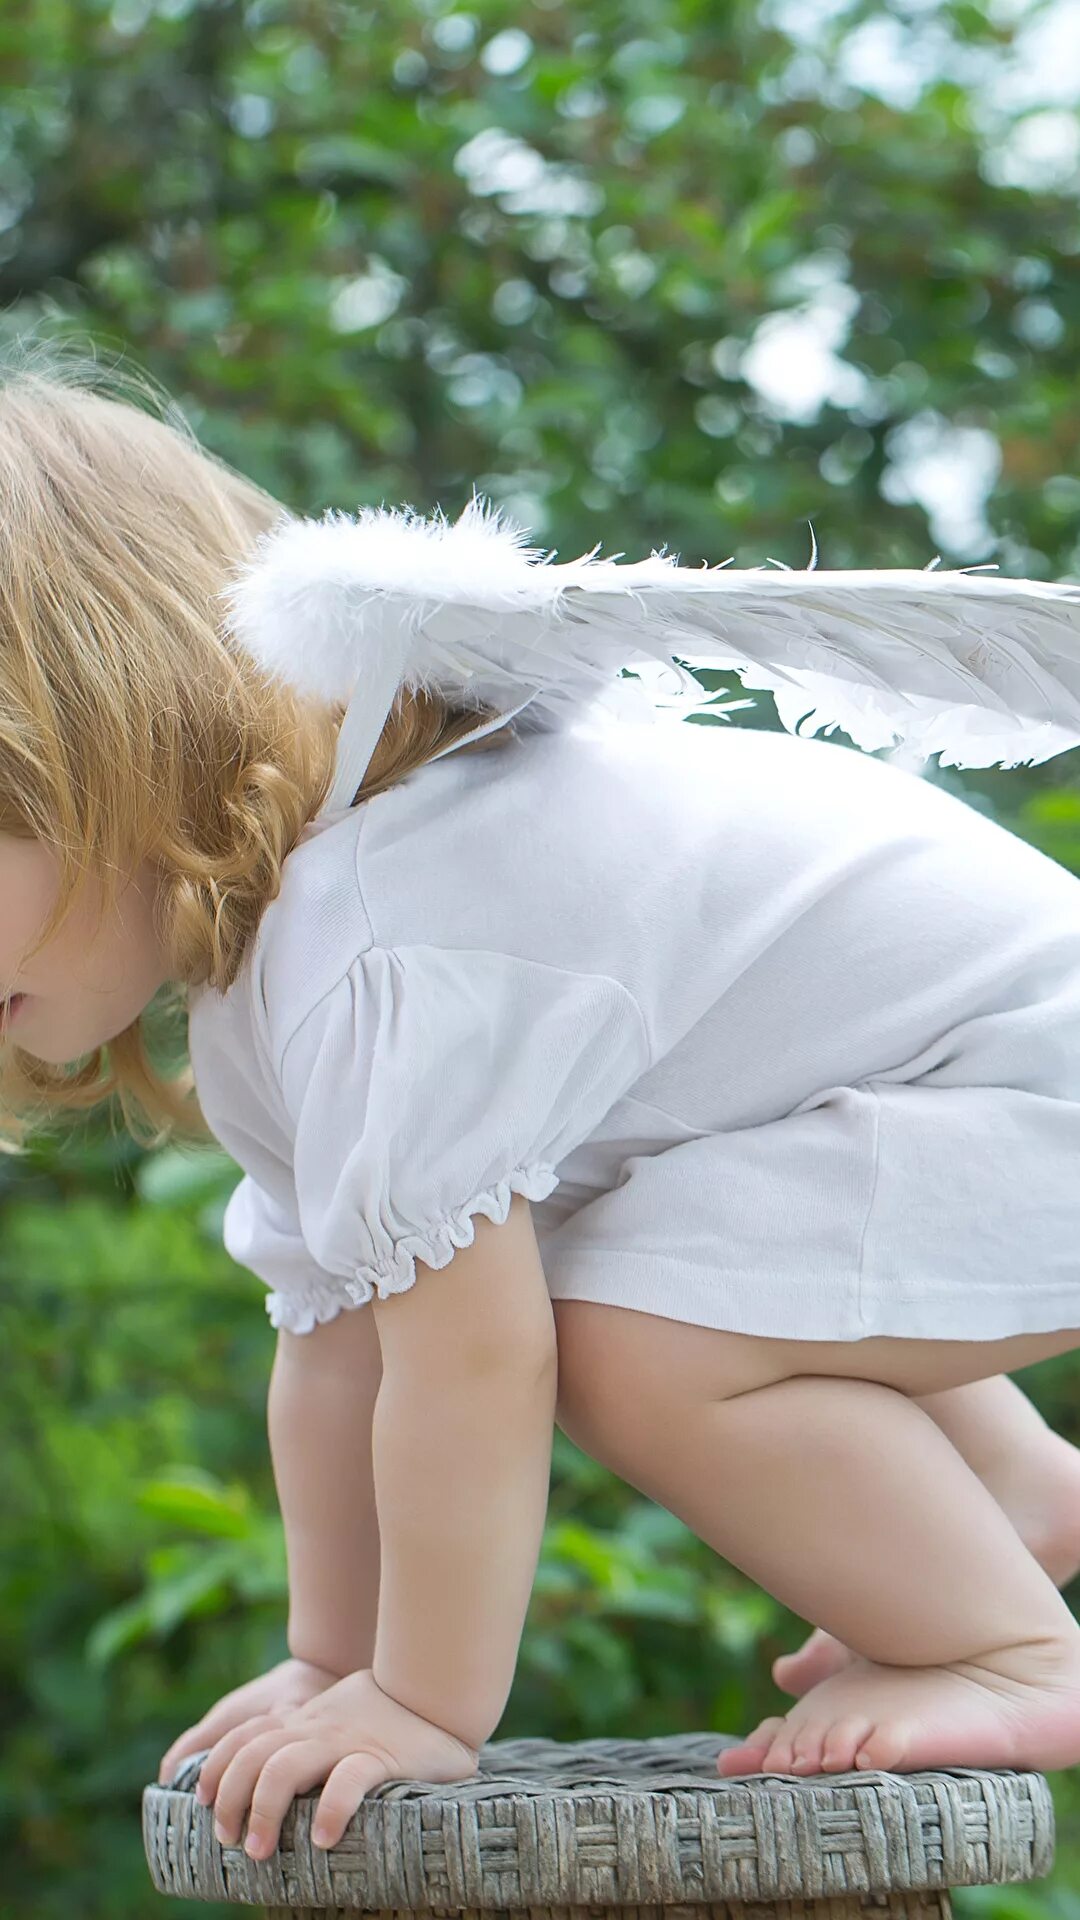 Крылья для детей. Младенец с крылышками. Ребенок с крылышками ангела. Ангел девочка младенец.